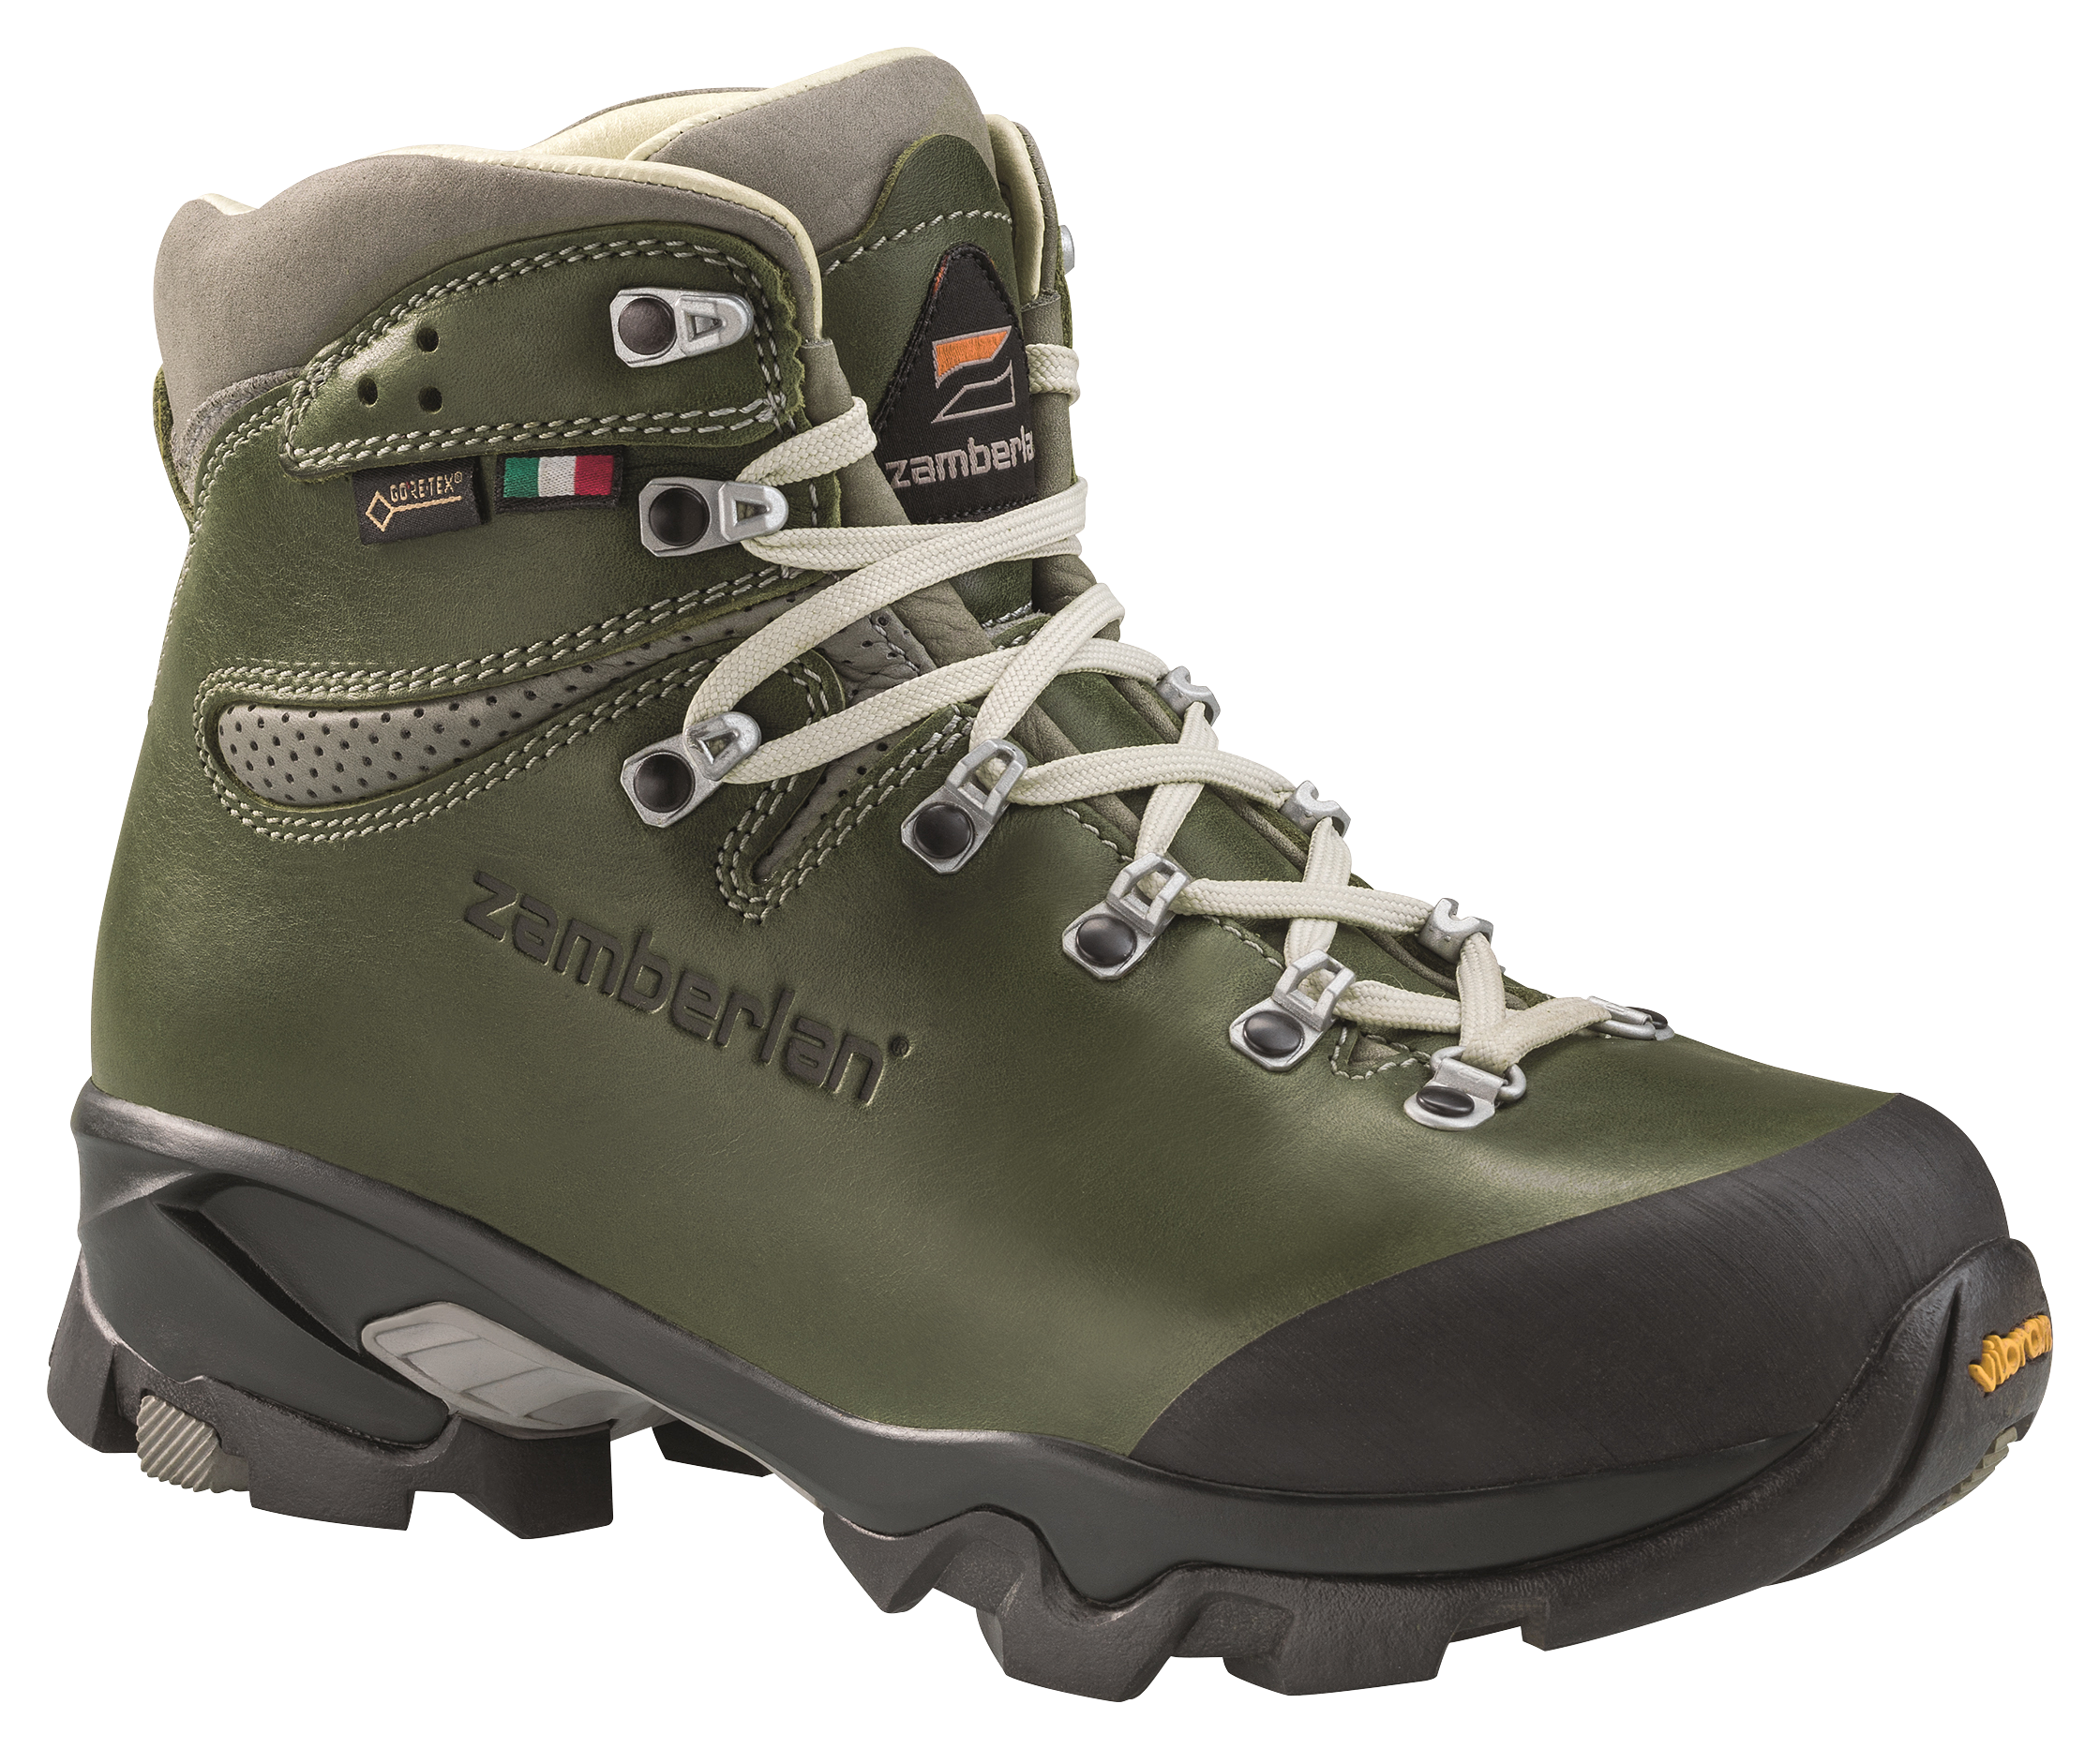 Zamberlan 1996 Vioz Lux GTX RR Waterproof Hiking Boots for Ladies - Waxed Green - 6M